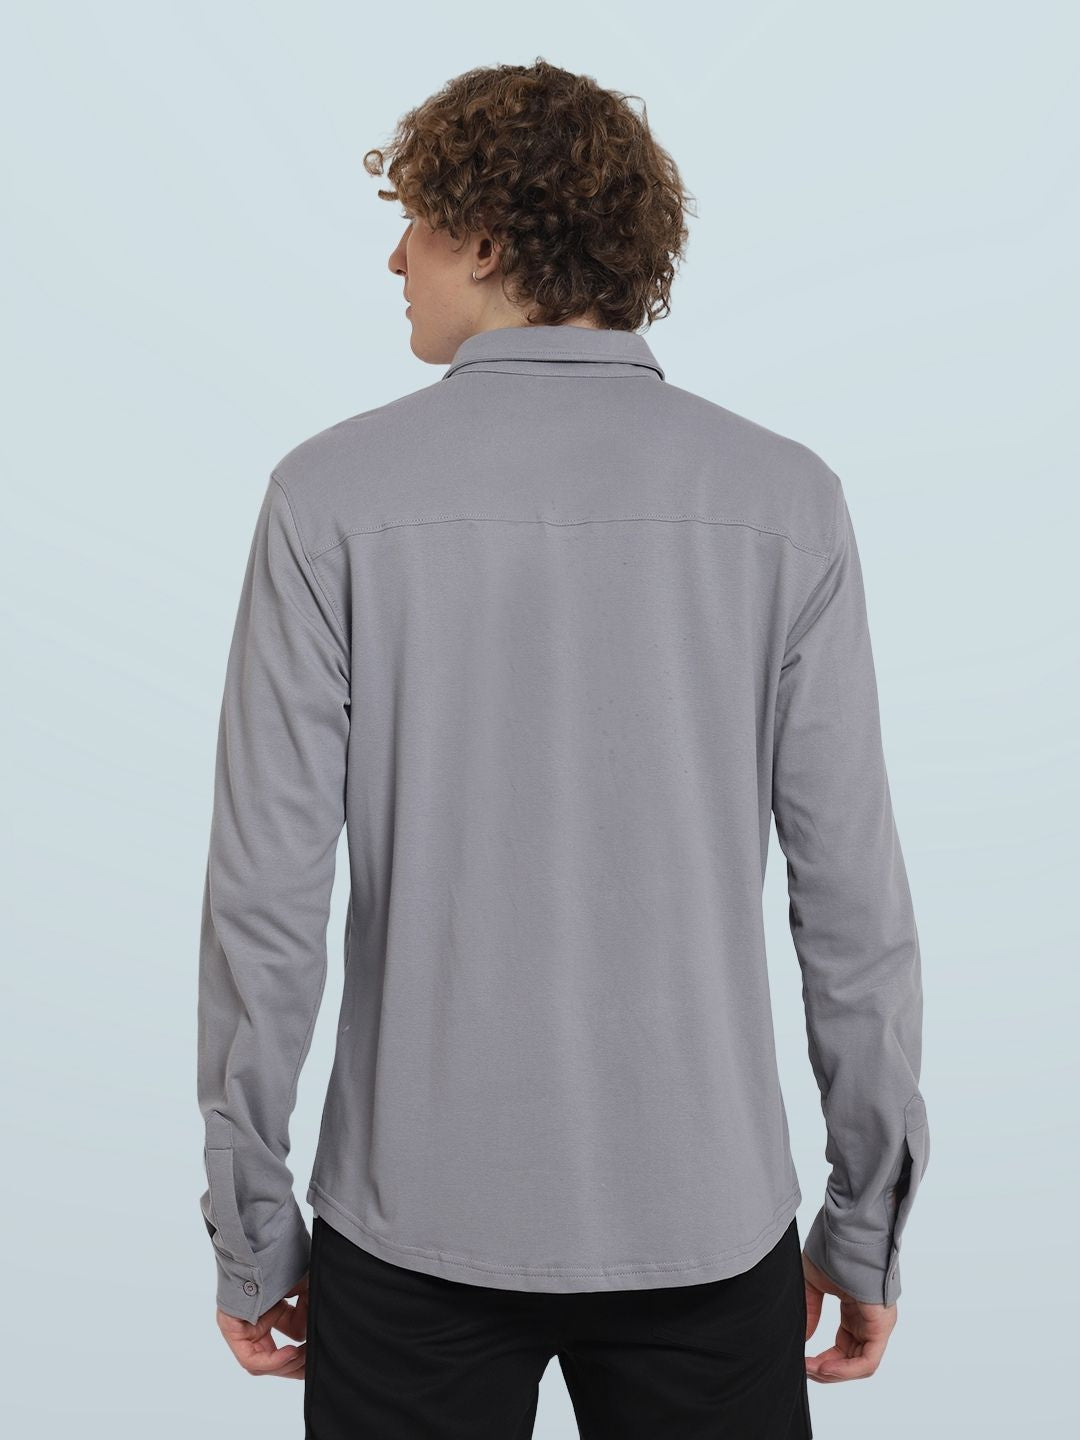 Silver Grey Sporty Pique Shirt - Wearduds